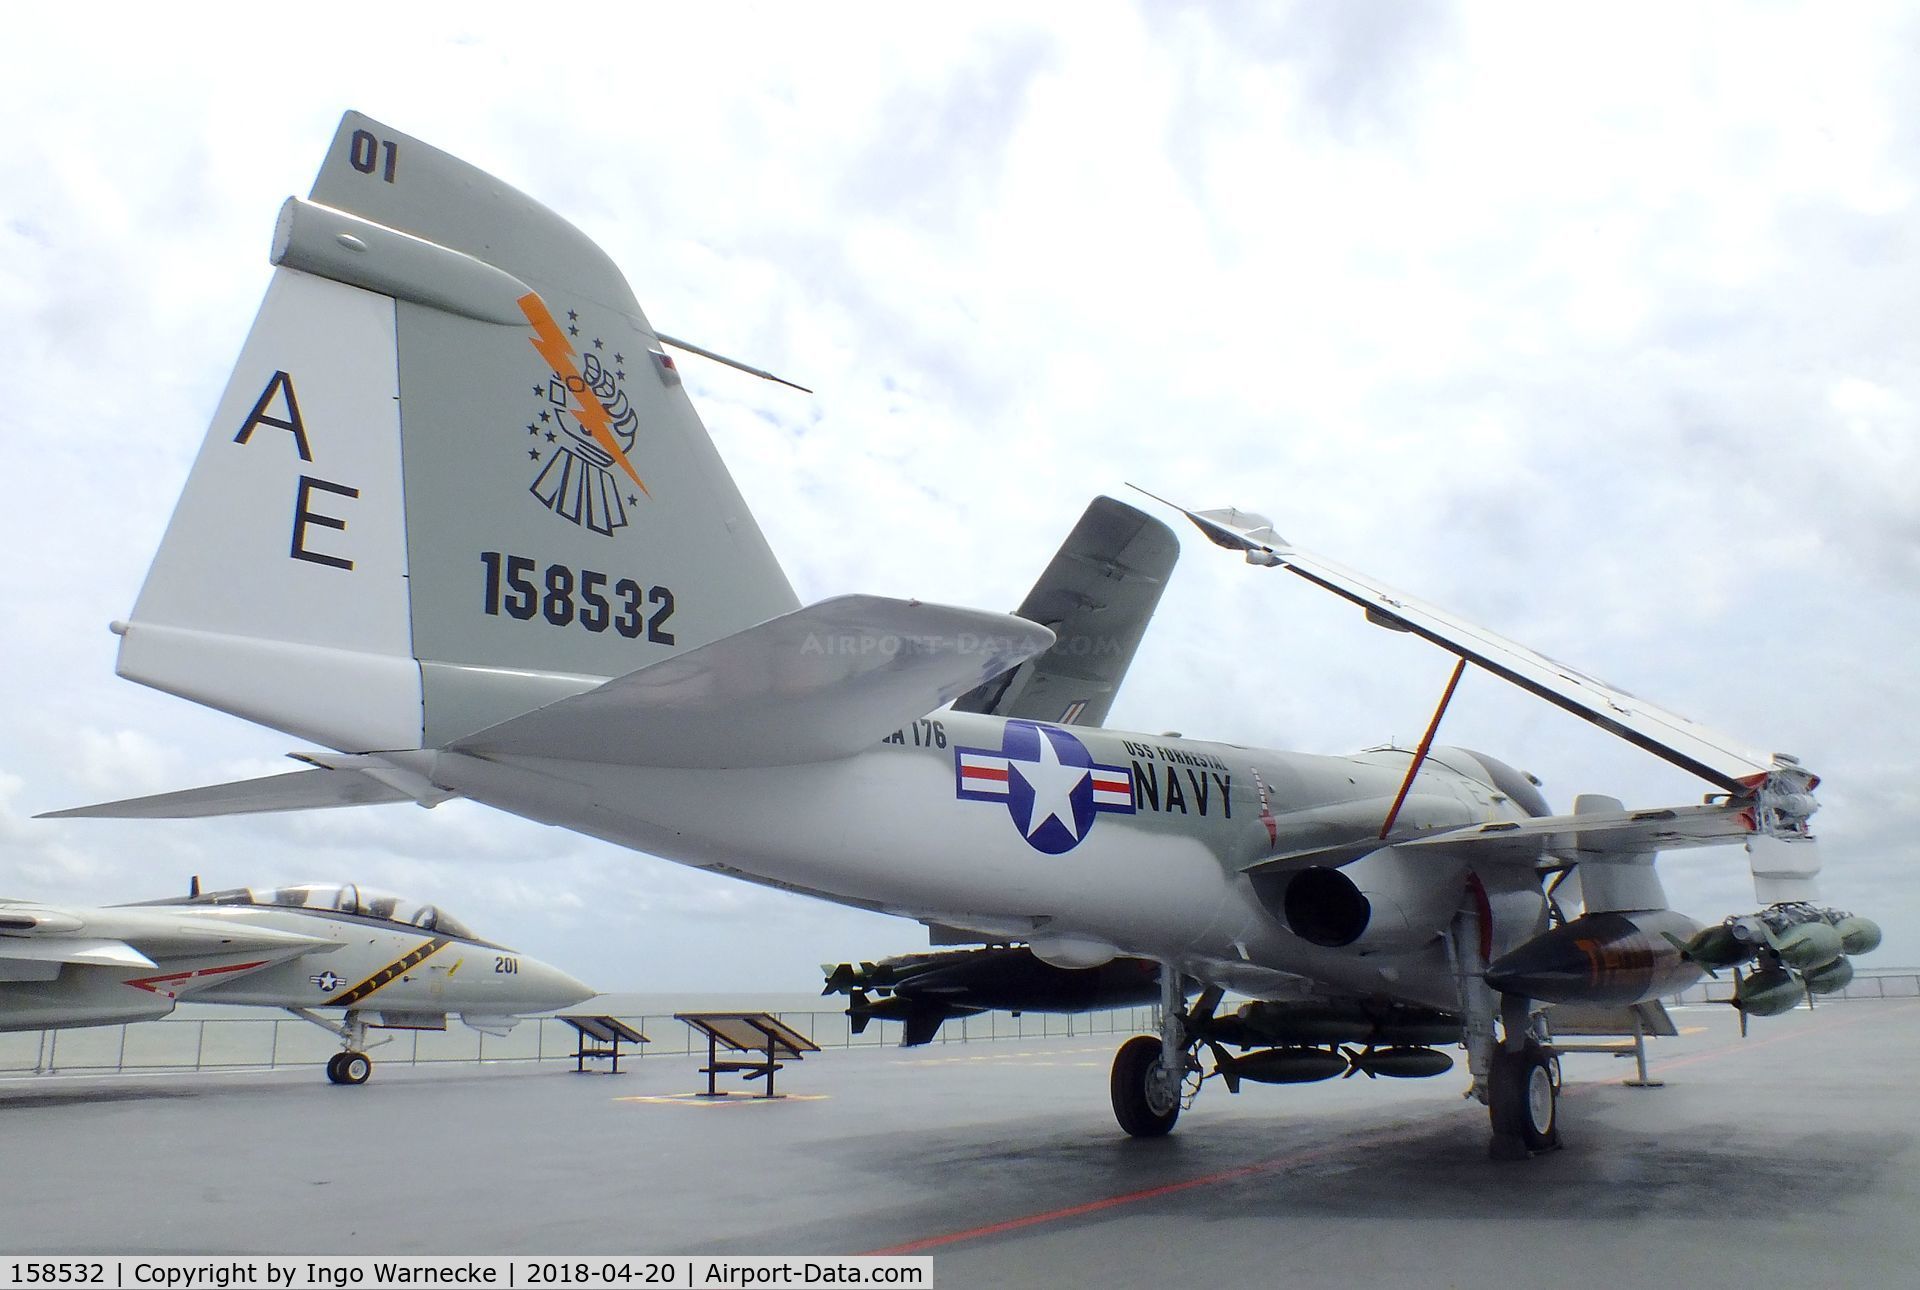 158532, Grumman A-6E Intruder C/N I-515, Grumman A-6E Intruder at the USS Lexington Museum, Corpus Christi TX